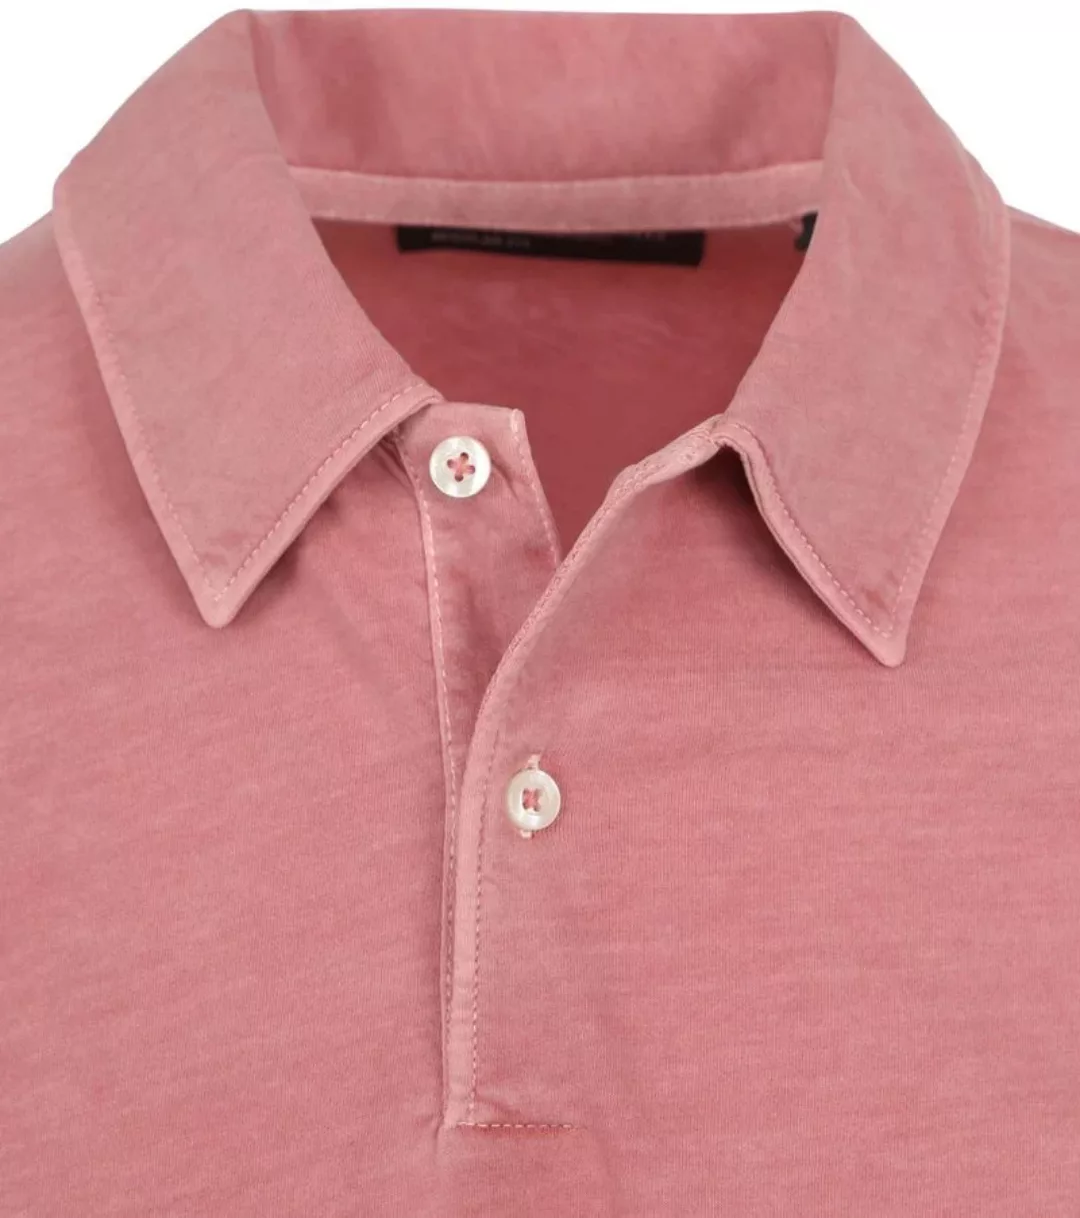 Marc O'Polo Poloshirt Terry Cloth Rosa - Größe L günstig online kaufen